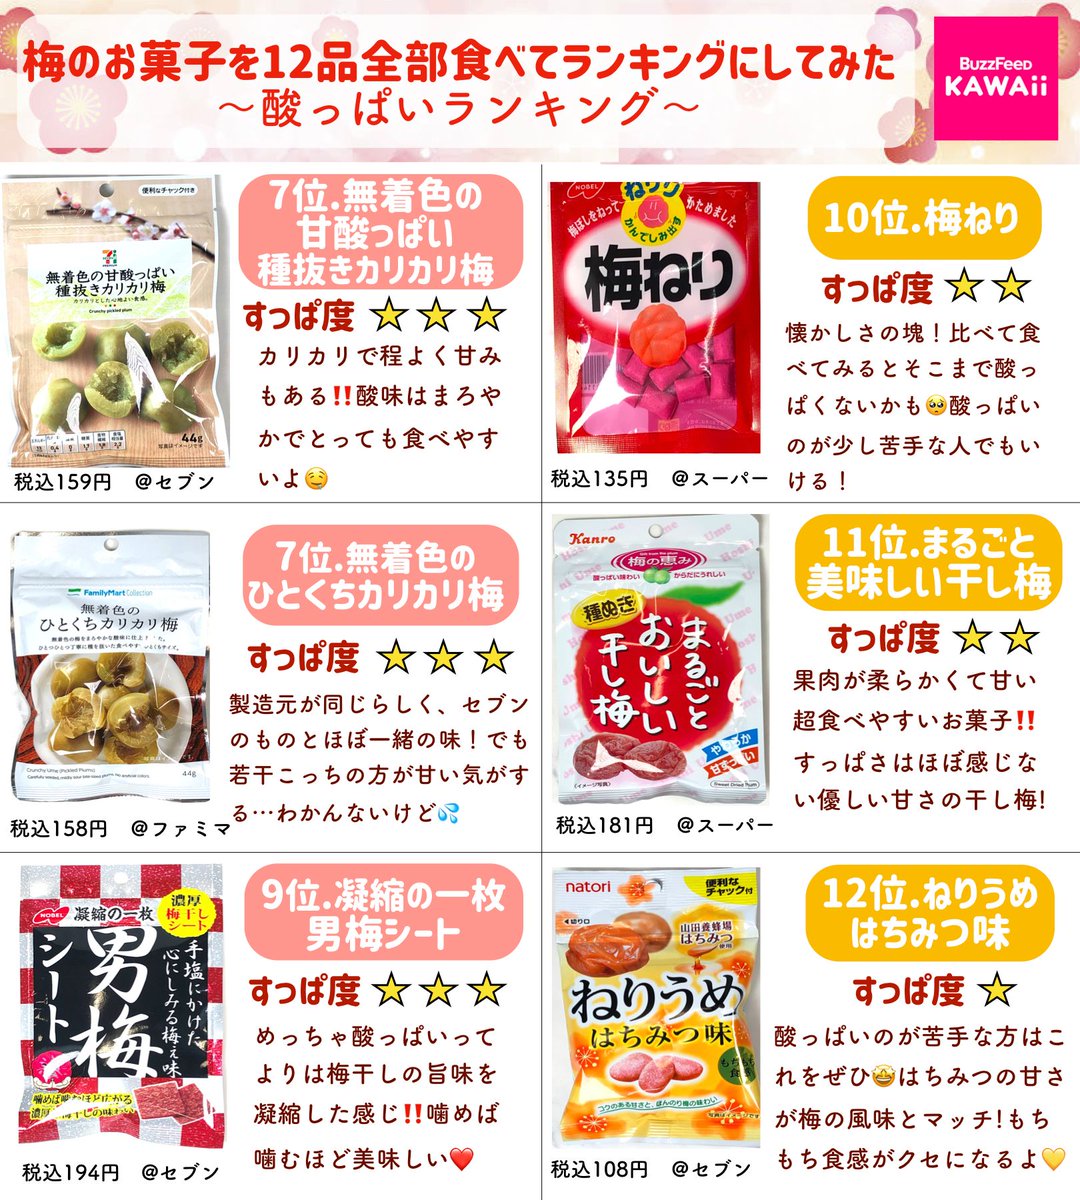 Buzzfeed Kawaii On Twitter 梅のお菓子を12品全部食べてランキング